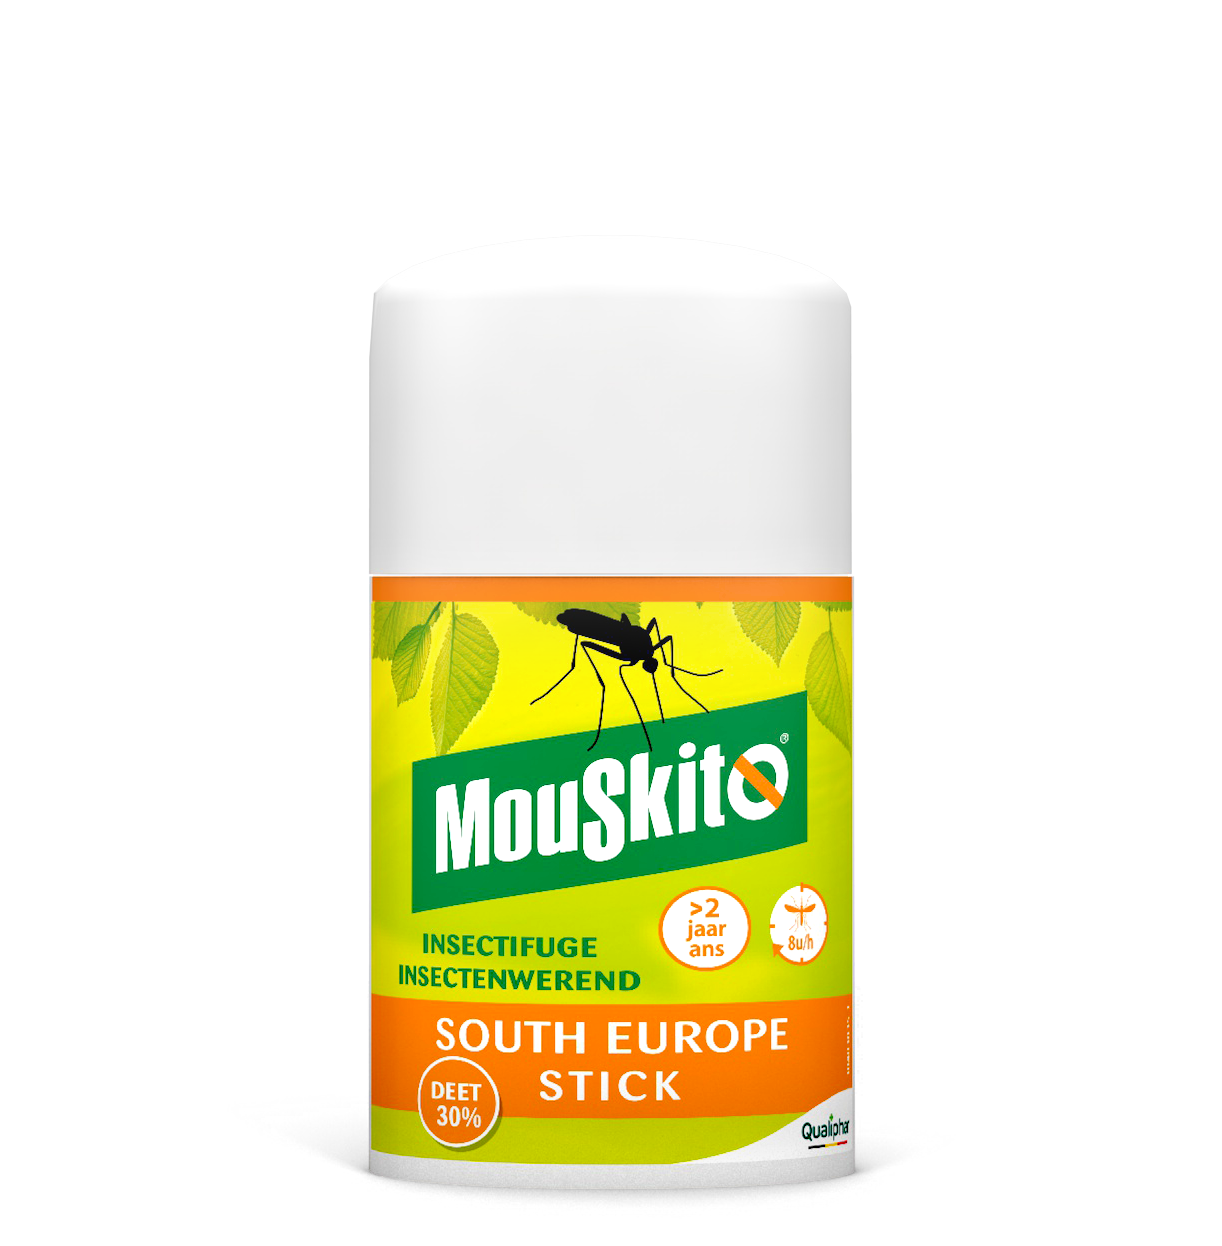 Mouskito® South Europe Stick